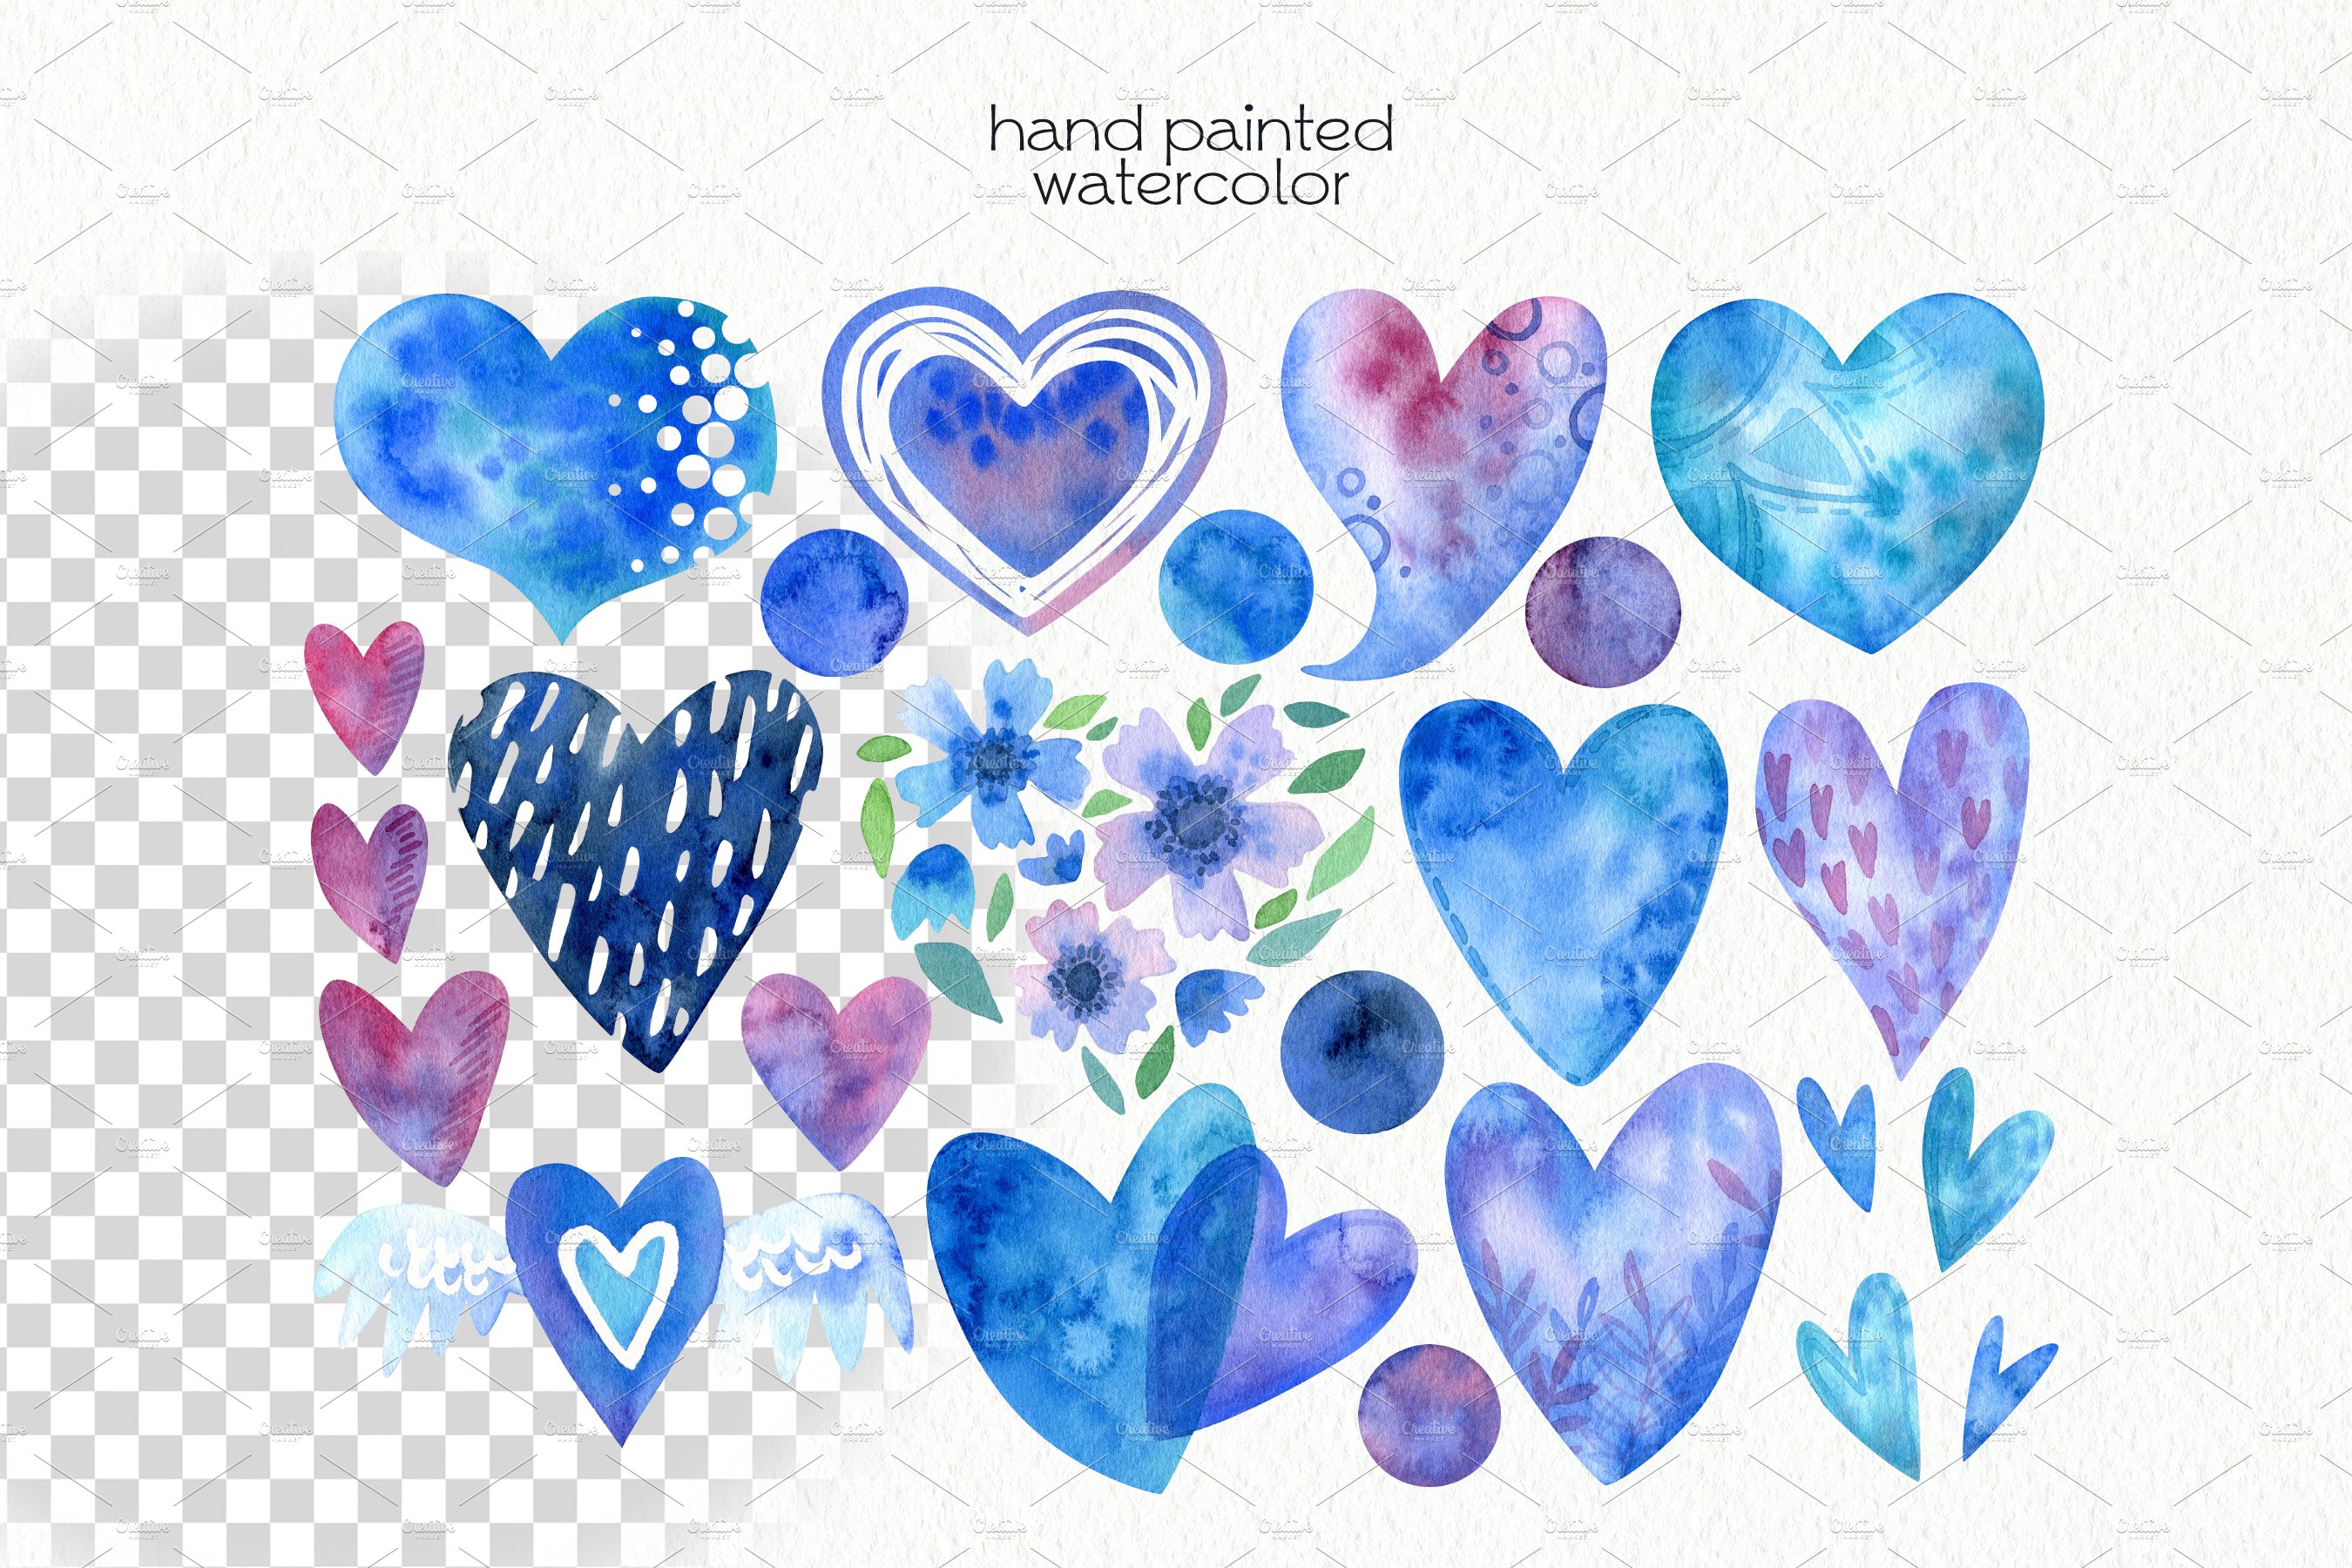 Diverse of watercolor blue hearts.